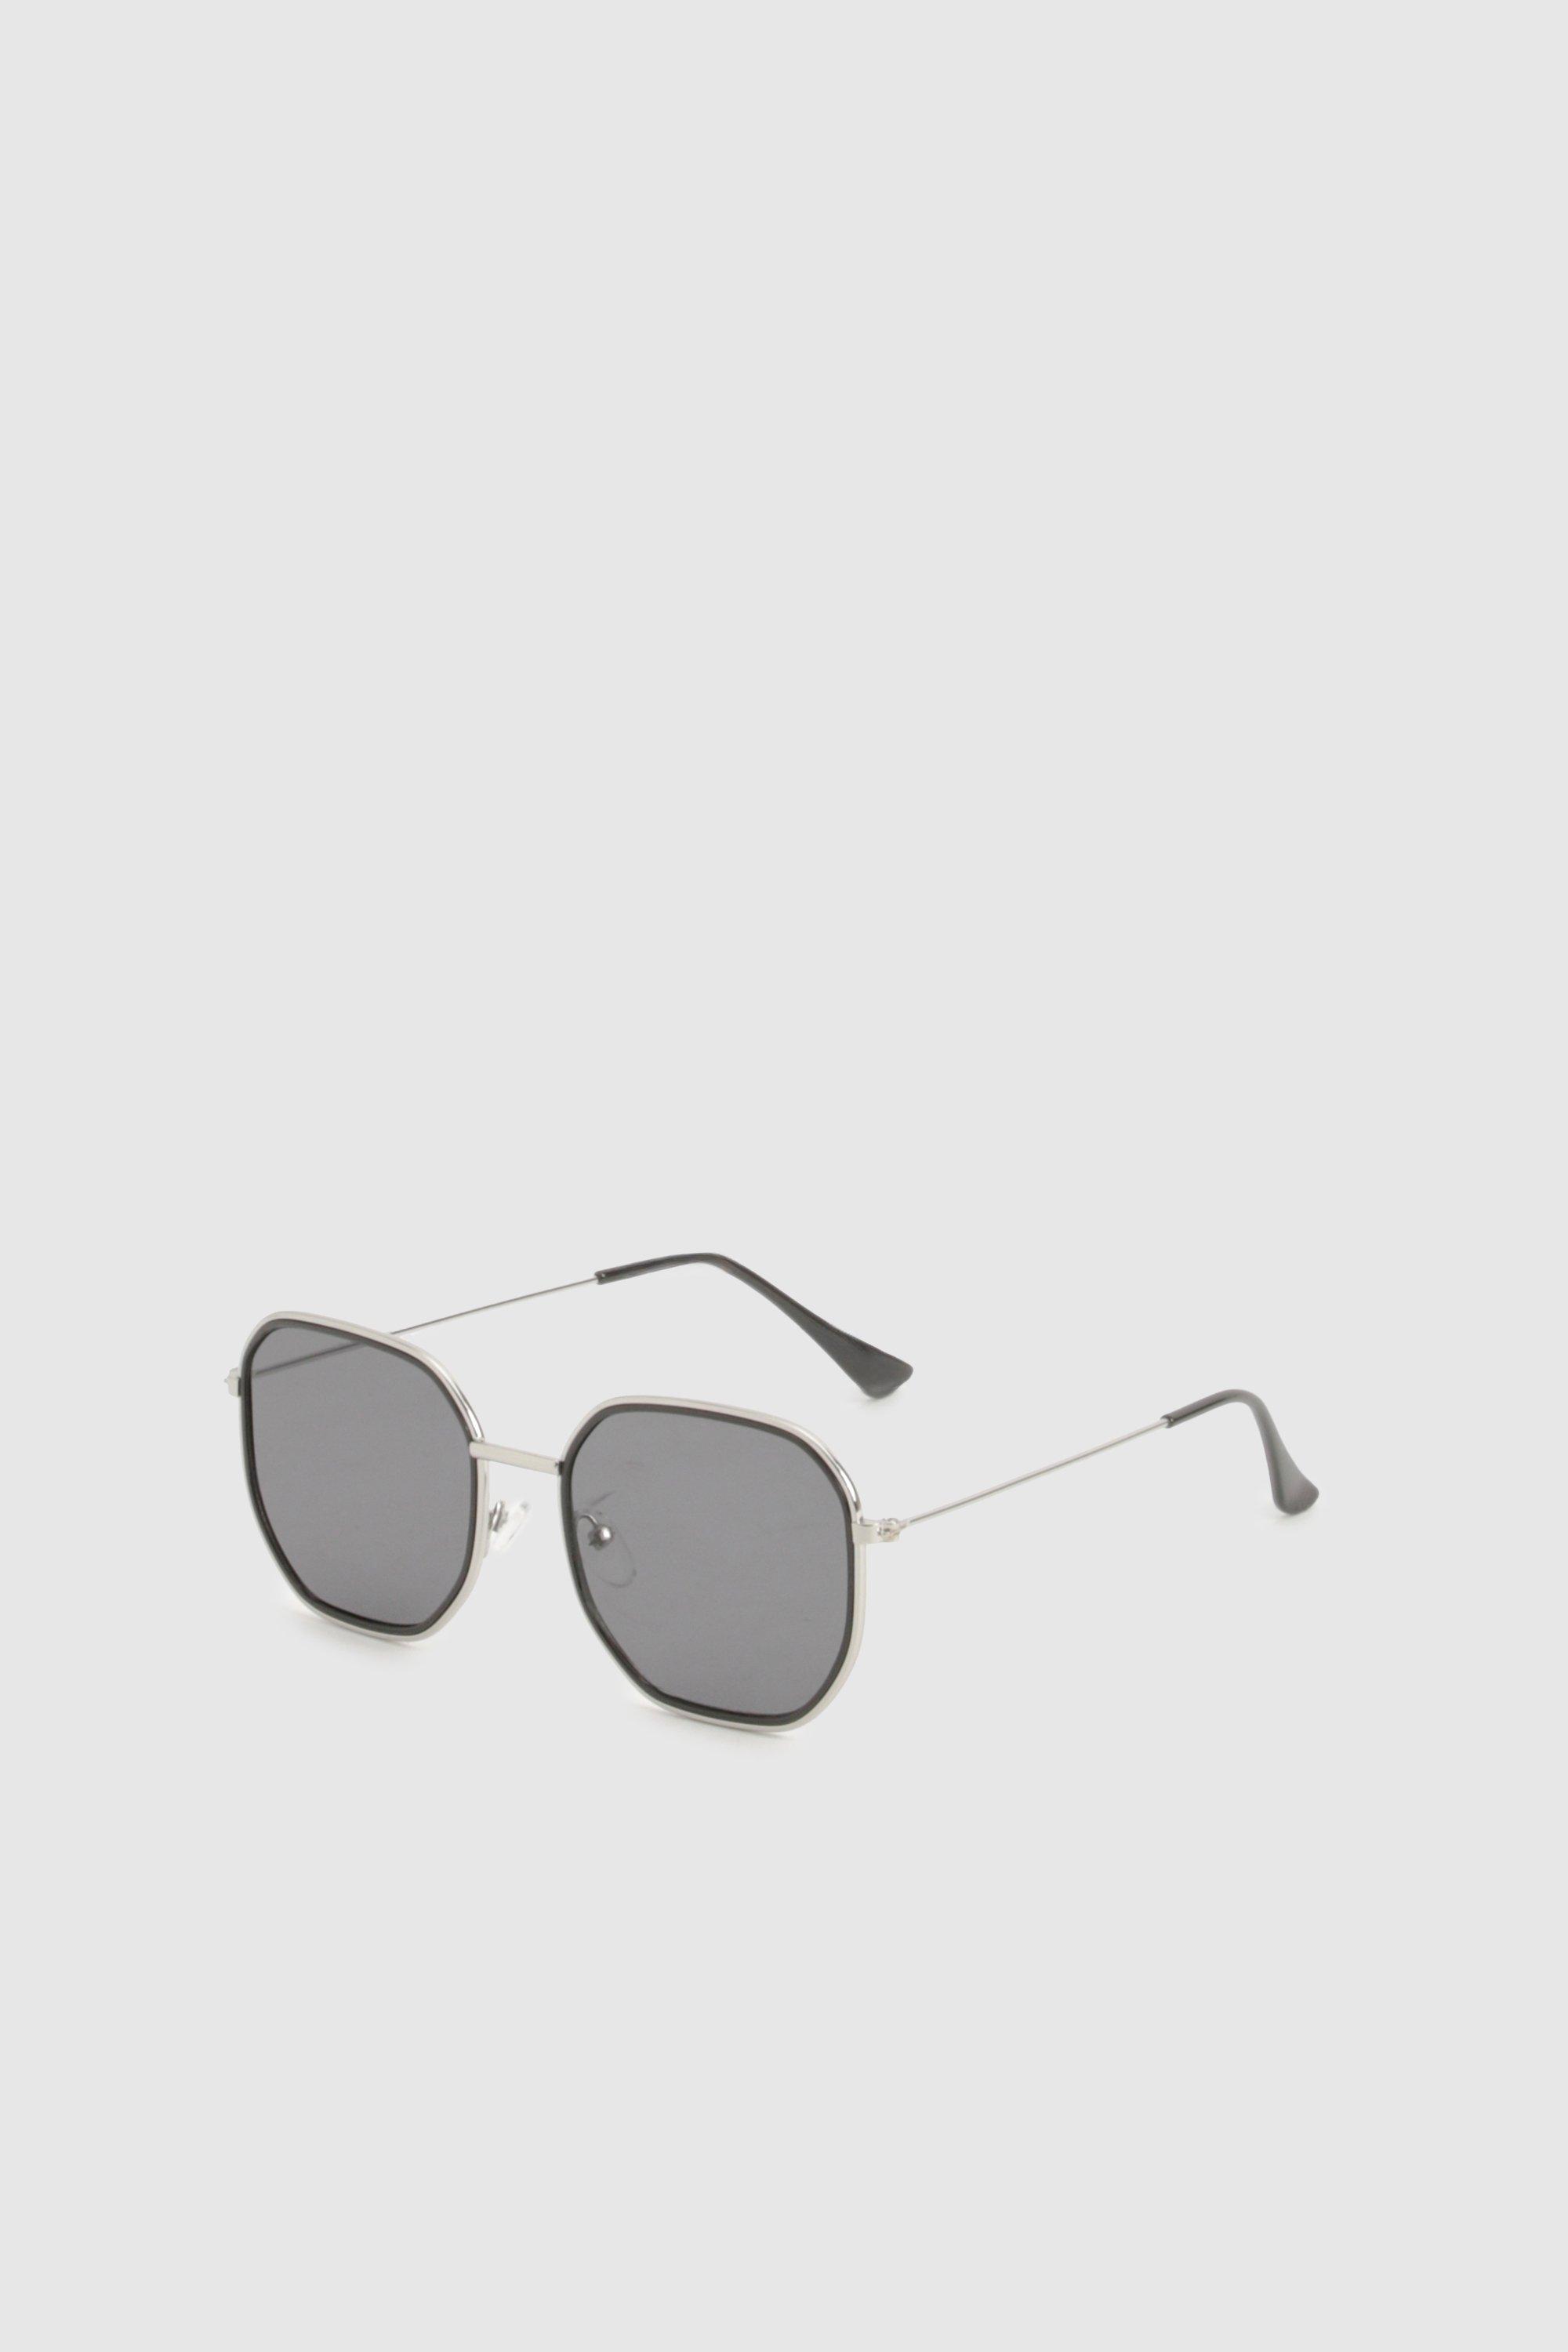 Image of Tinted Metal Frame Round Sunglasses, Grigio